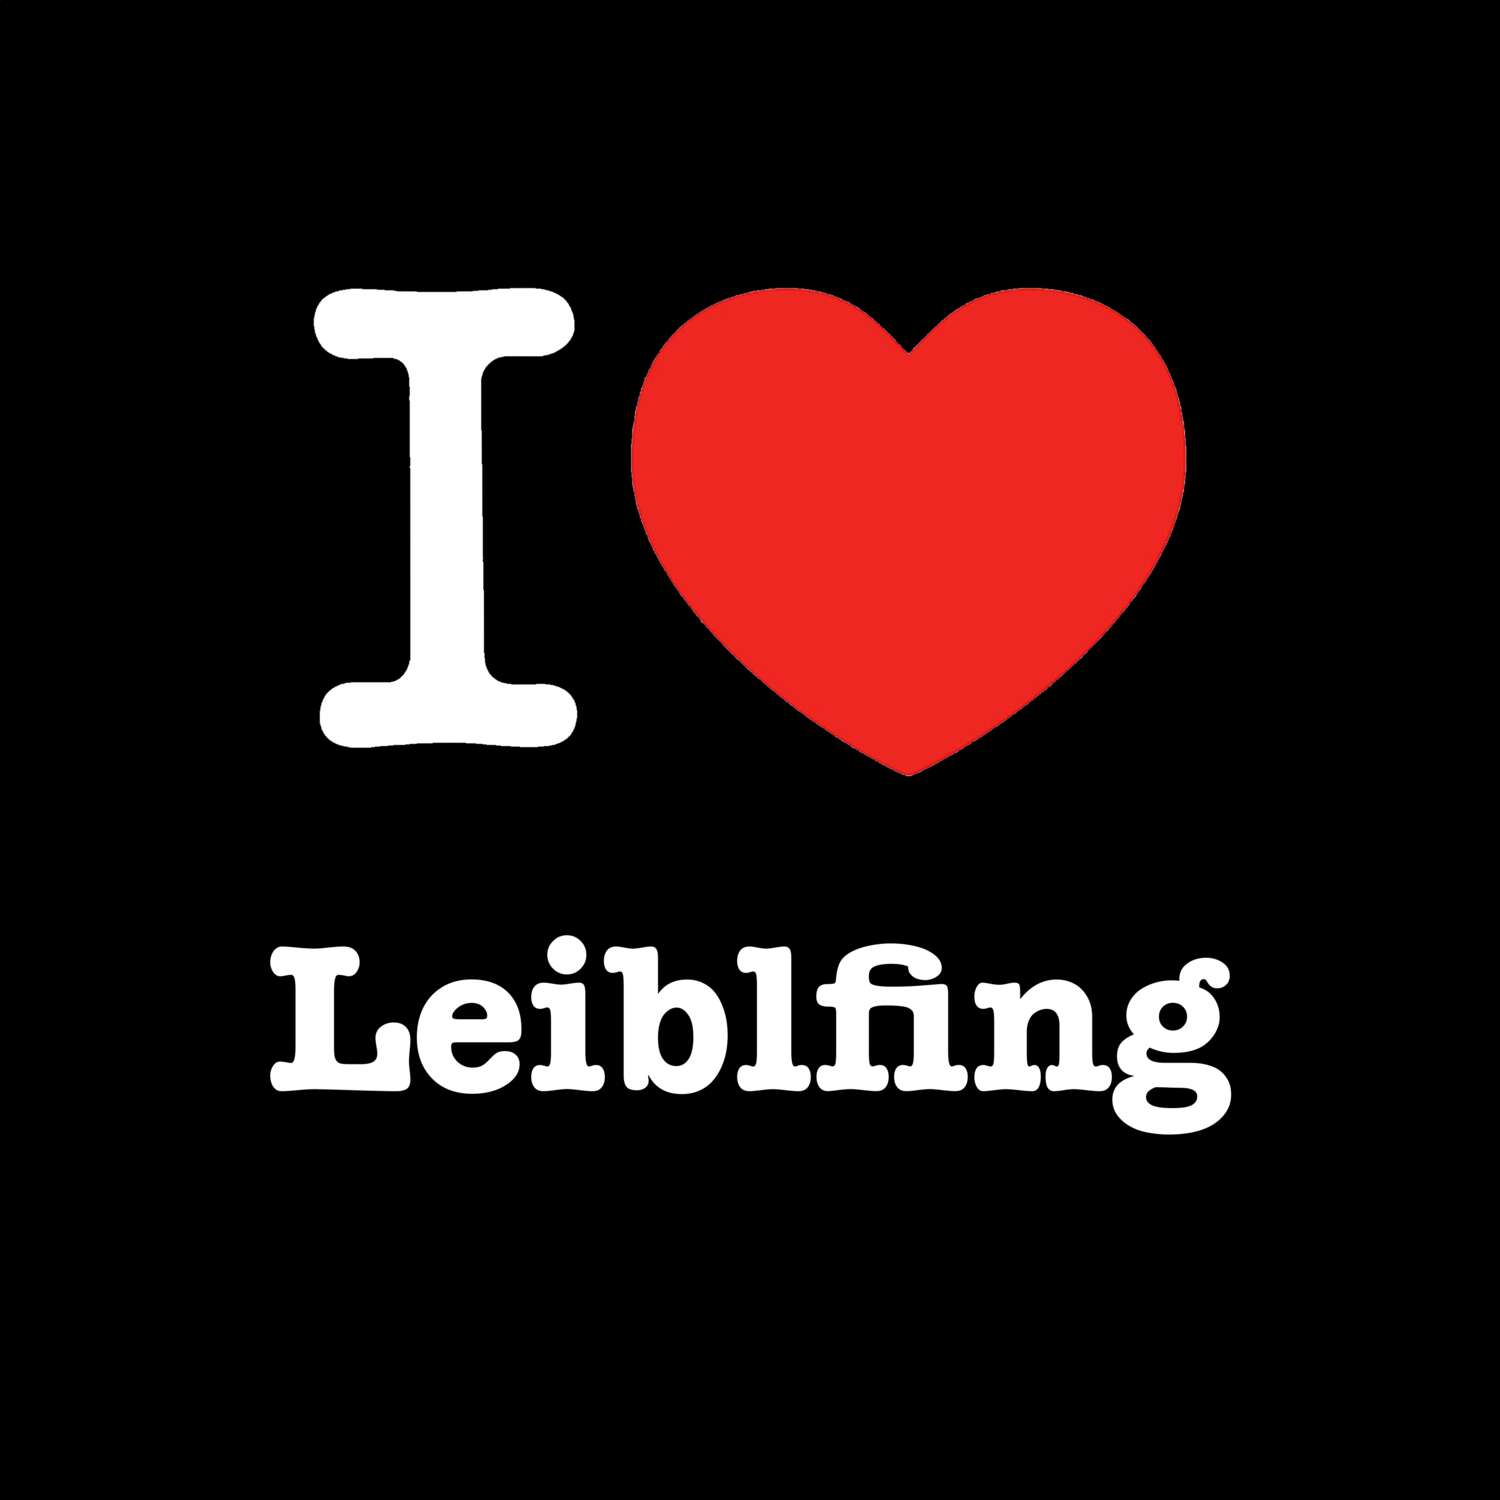 Leiblfing T-Shirt »I love«